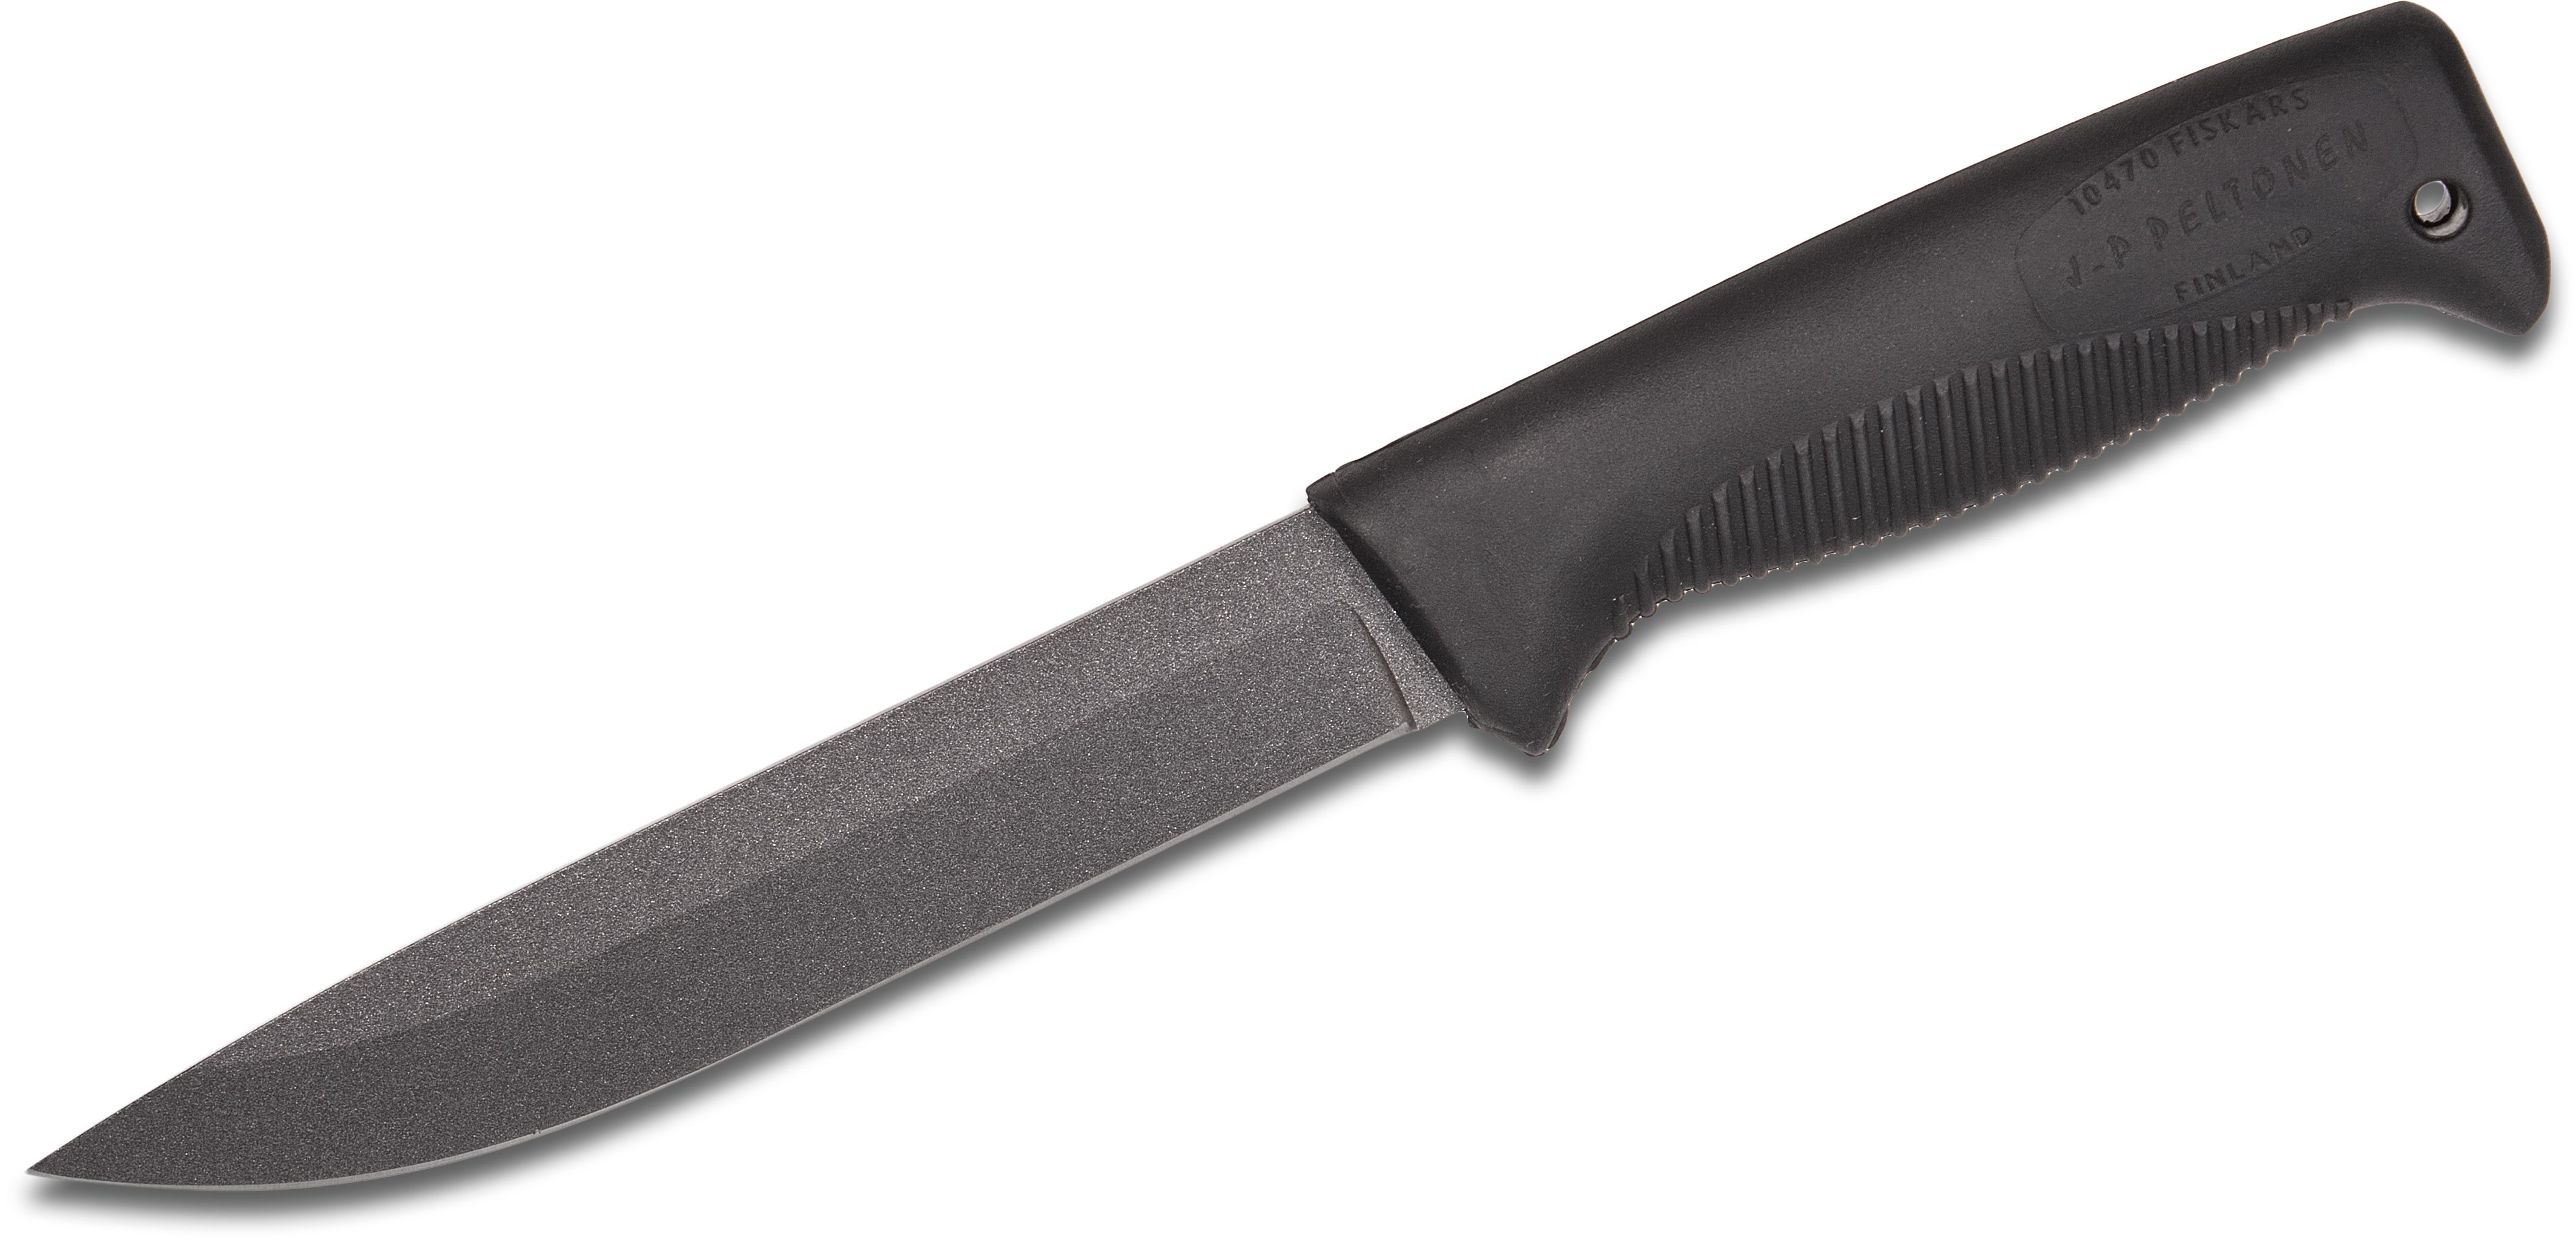 Kellam Knives Finnish Ranger Puukko M95 Fixed Knife 5.94" Teflon Coated Blade, Black Rubber Handle, Leather Sheath KnifeCenter - JPM95